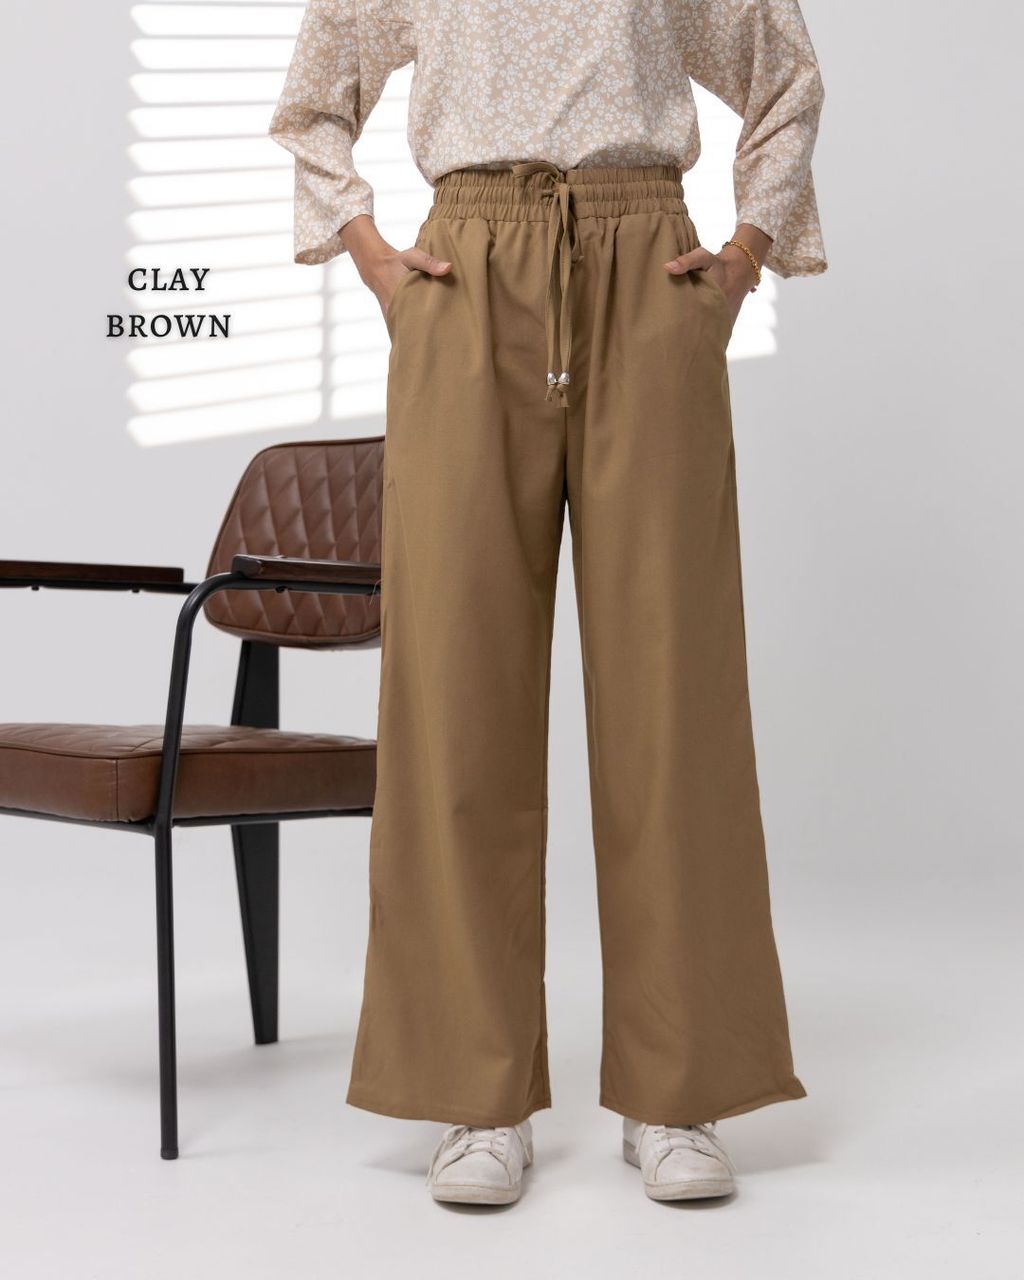 haura-wear-erma-palazzo-cotton-pants-high-waist-cotton-long-pants-seluar-muslimah-seluar-perempuan-palazzo-pants-sluar-skirt (8)